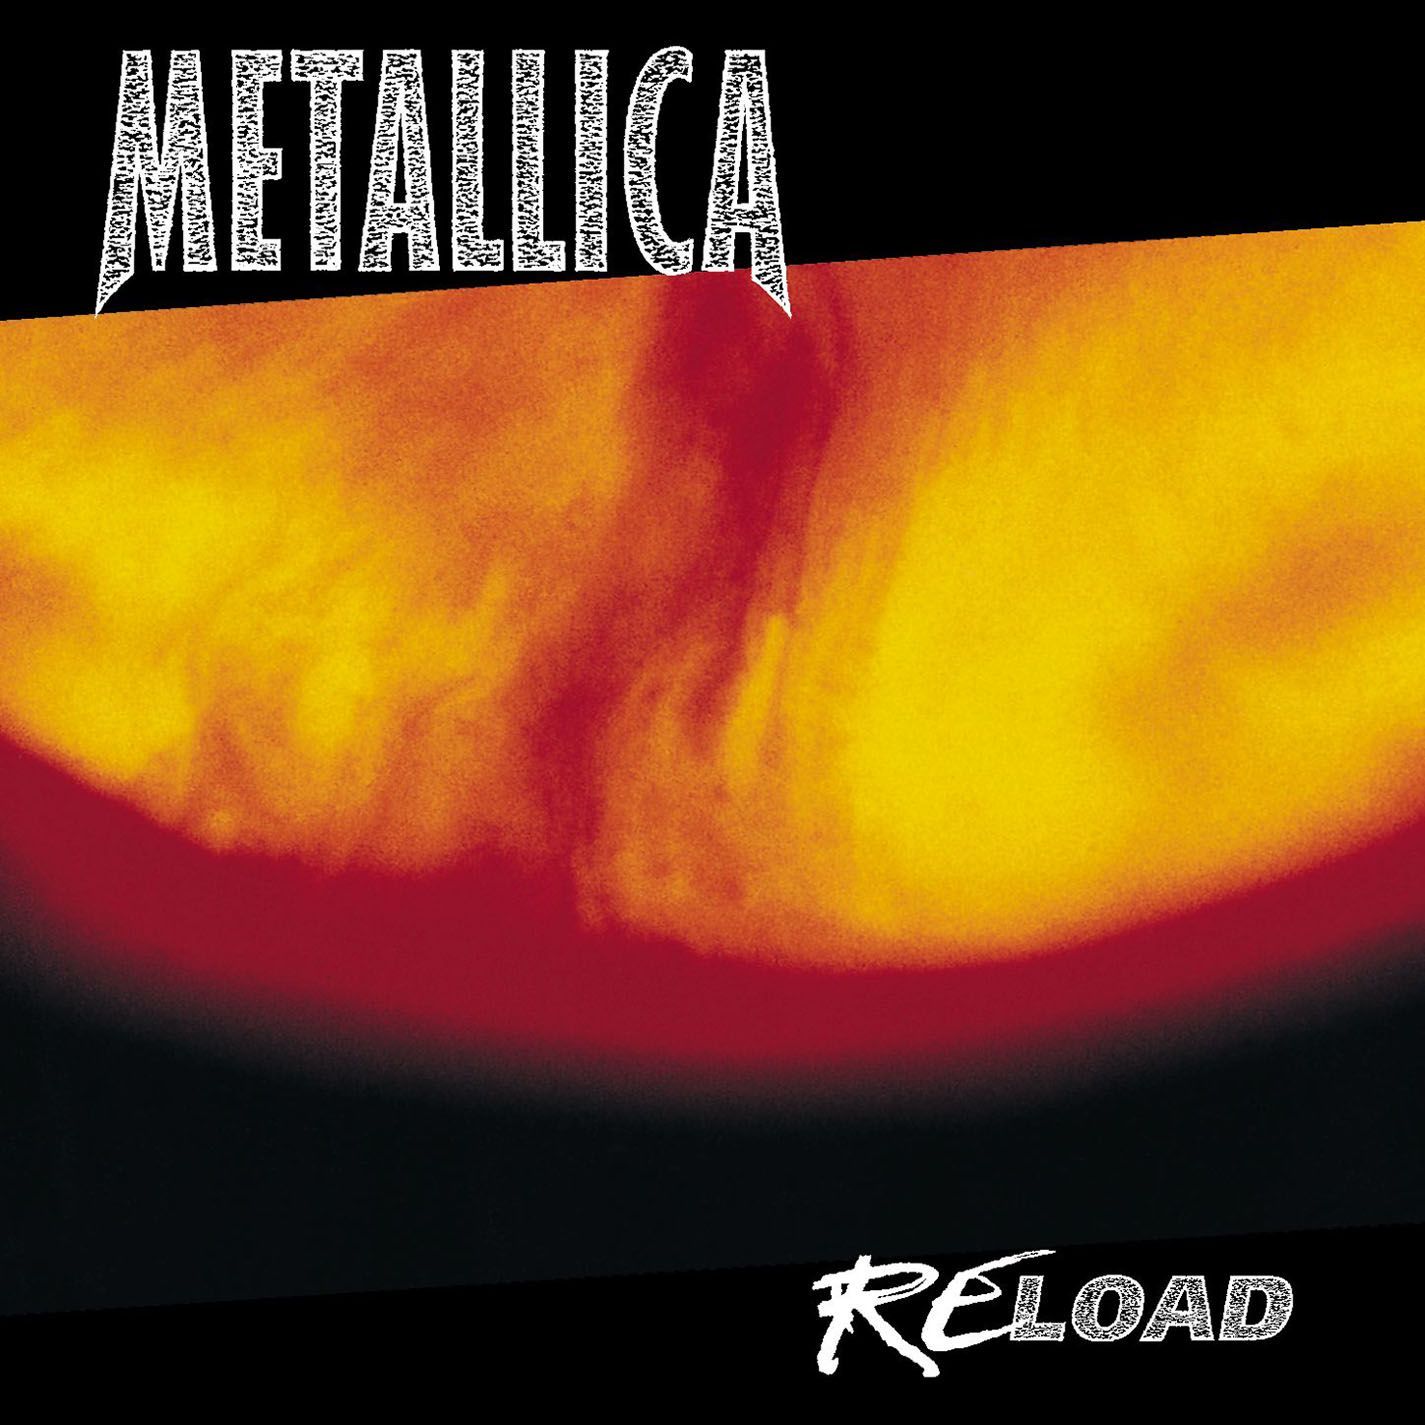 Reload|Metallica